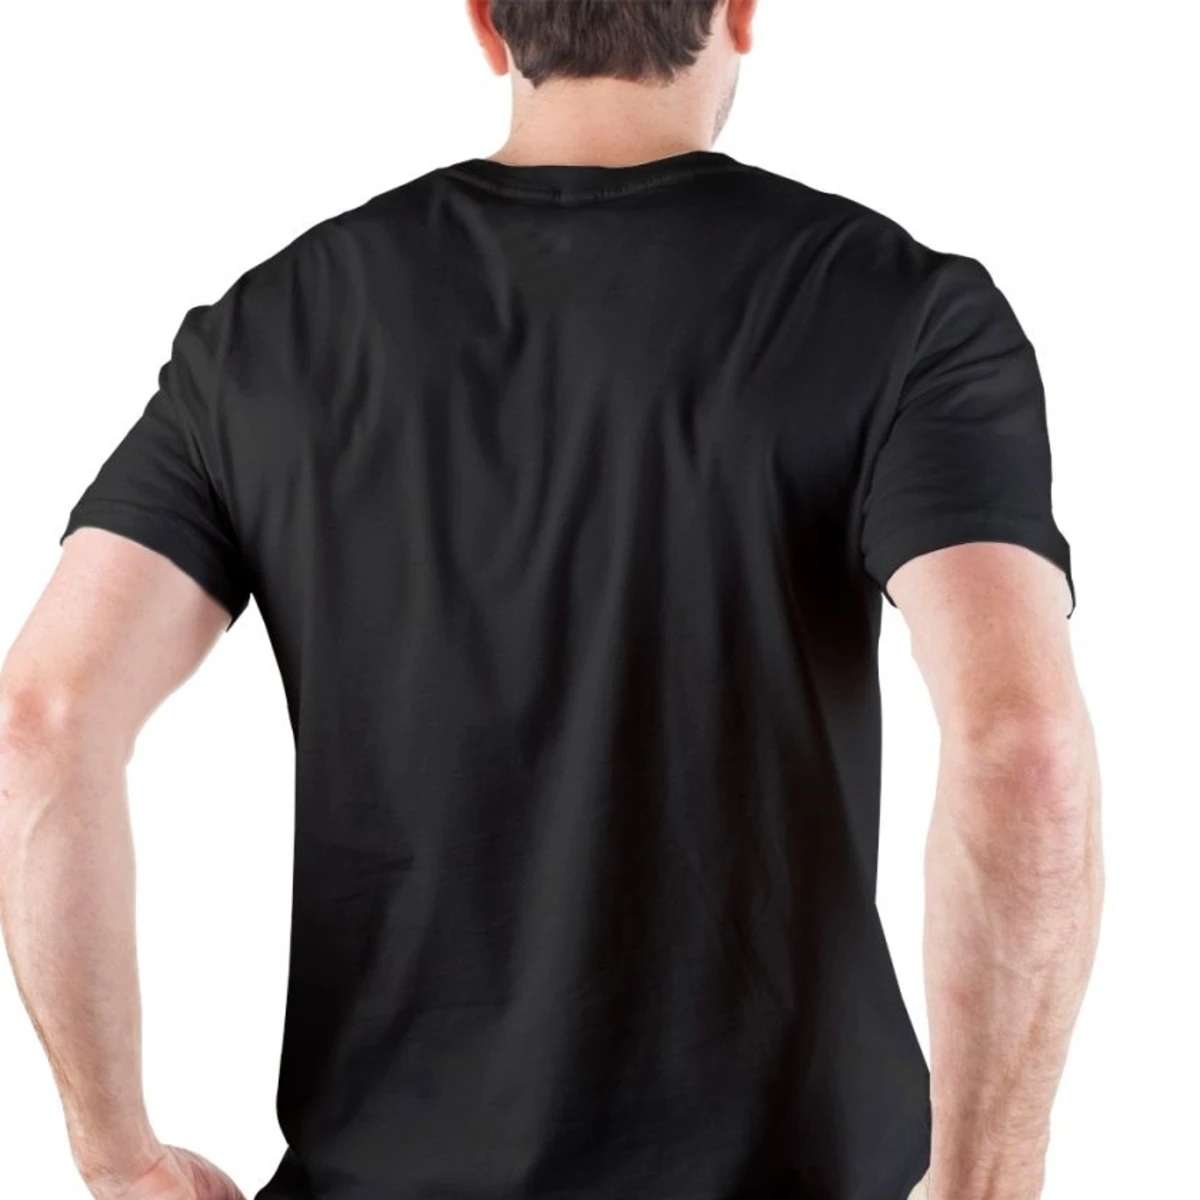 Bloodsport Filmski Plakat Tee Shirt Jean Claude Van Damme Tshirts Moških Cotton Tee Shirt Camisas Hombre Oblačila